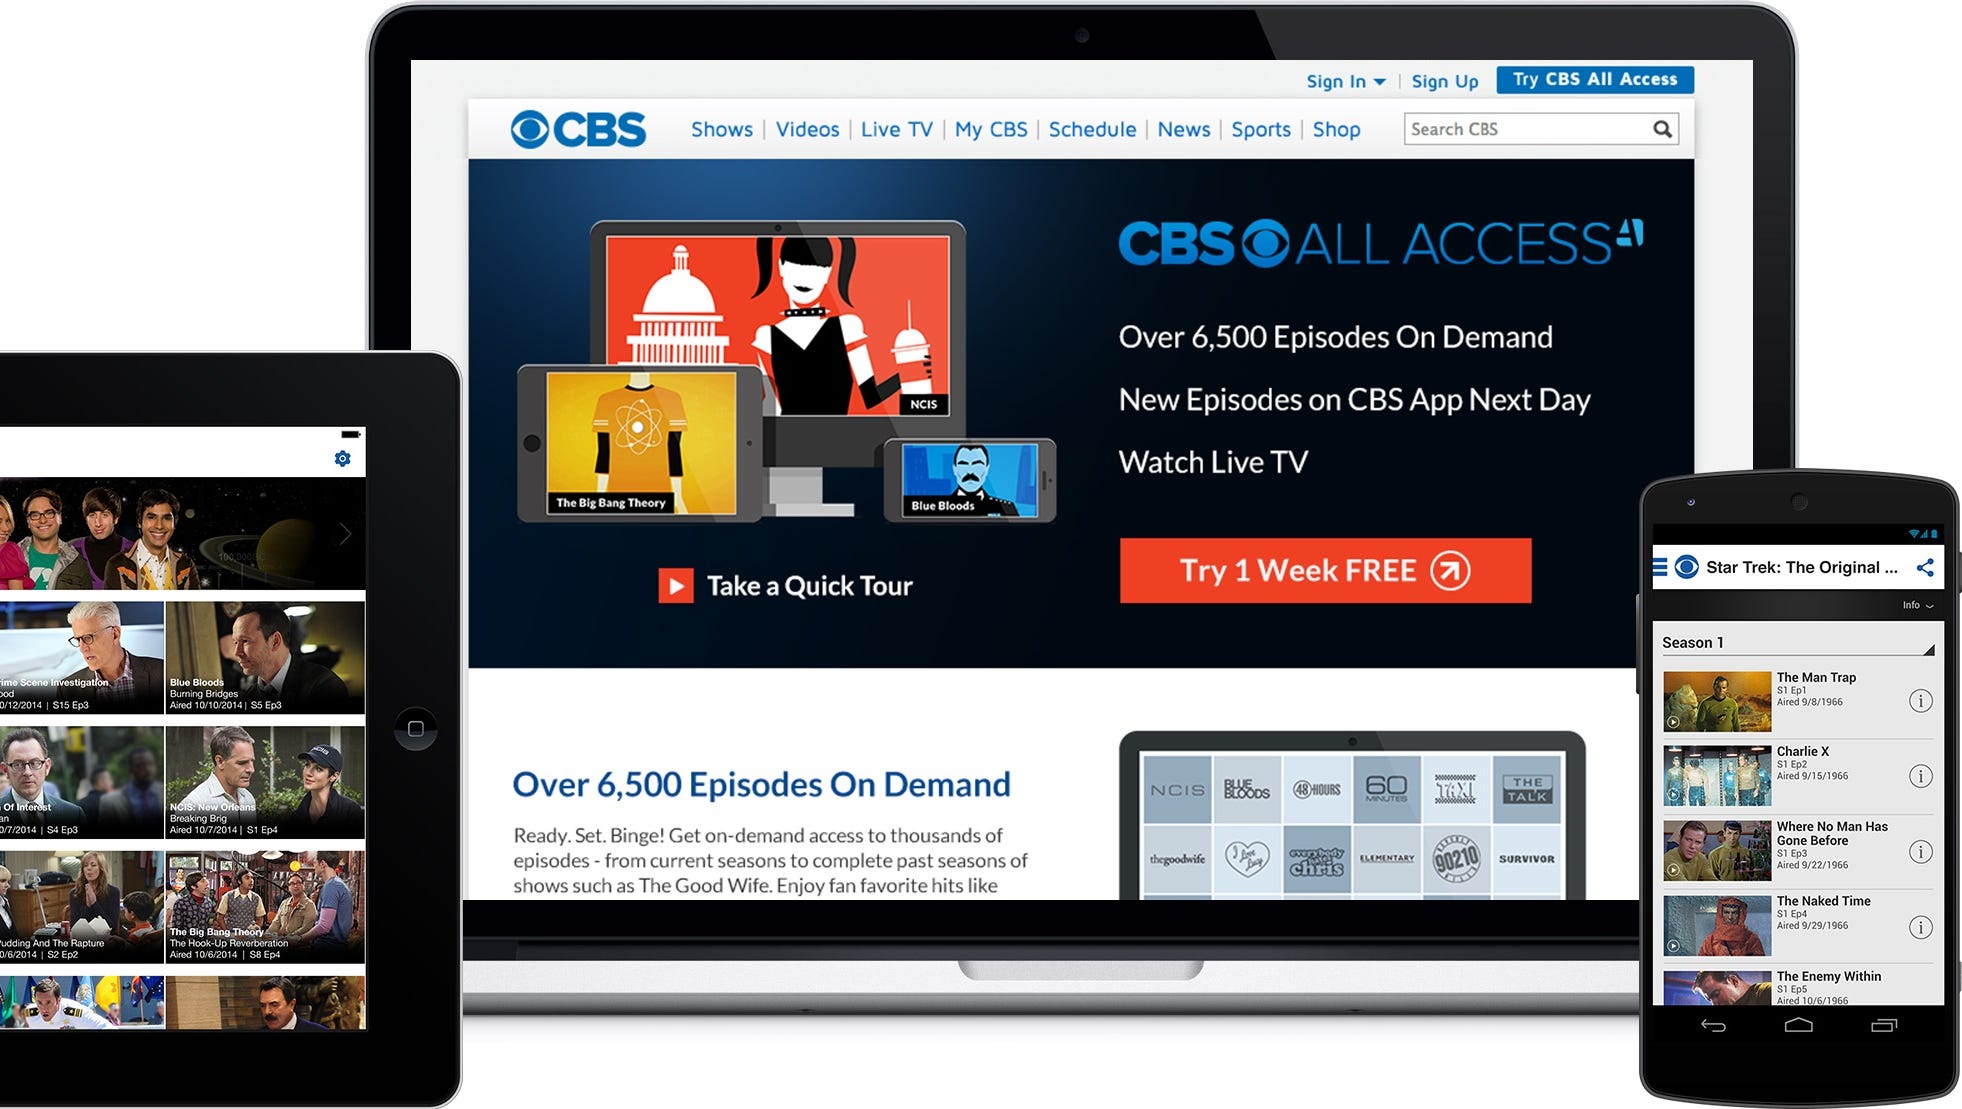 CBS app. Access over